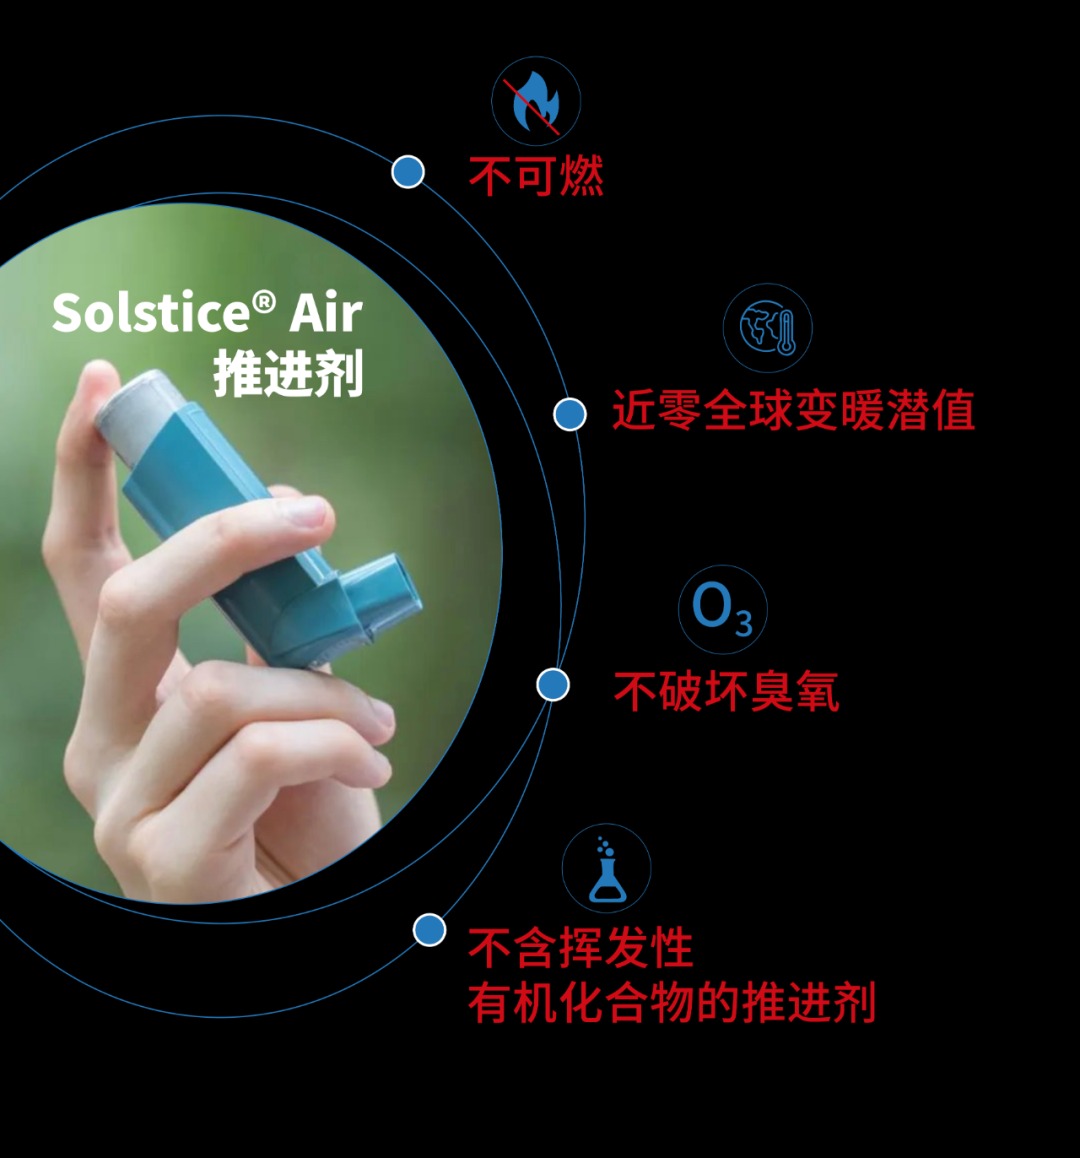  Solstice® Air作为医用推进剂